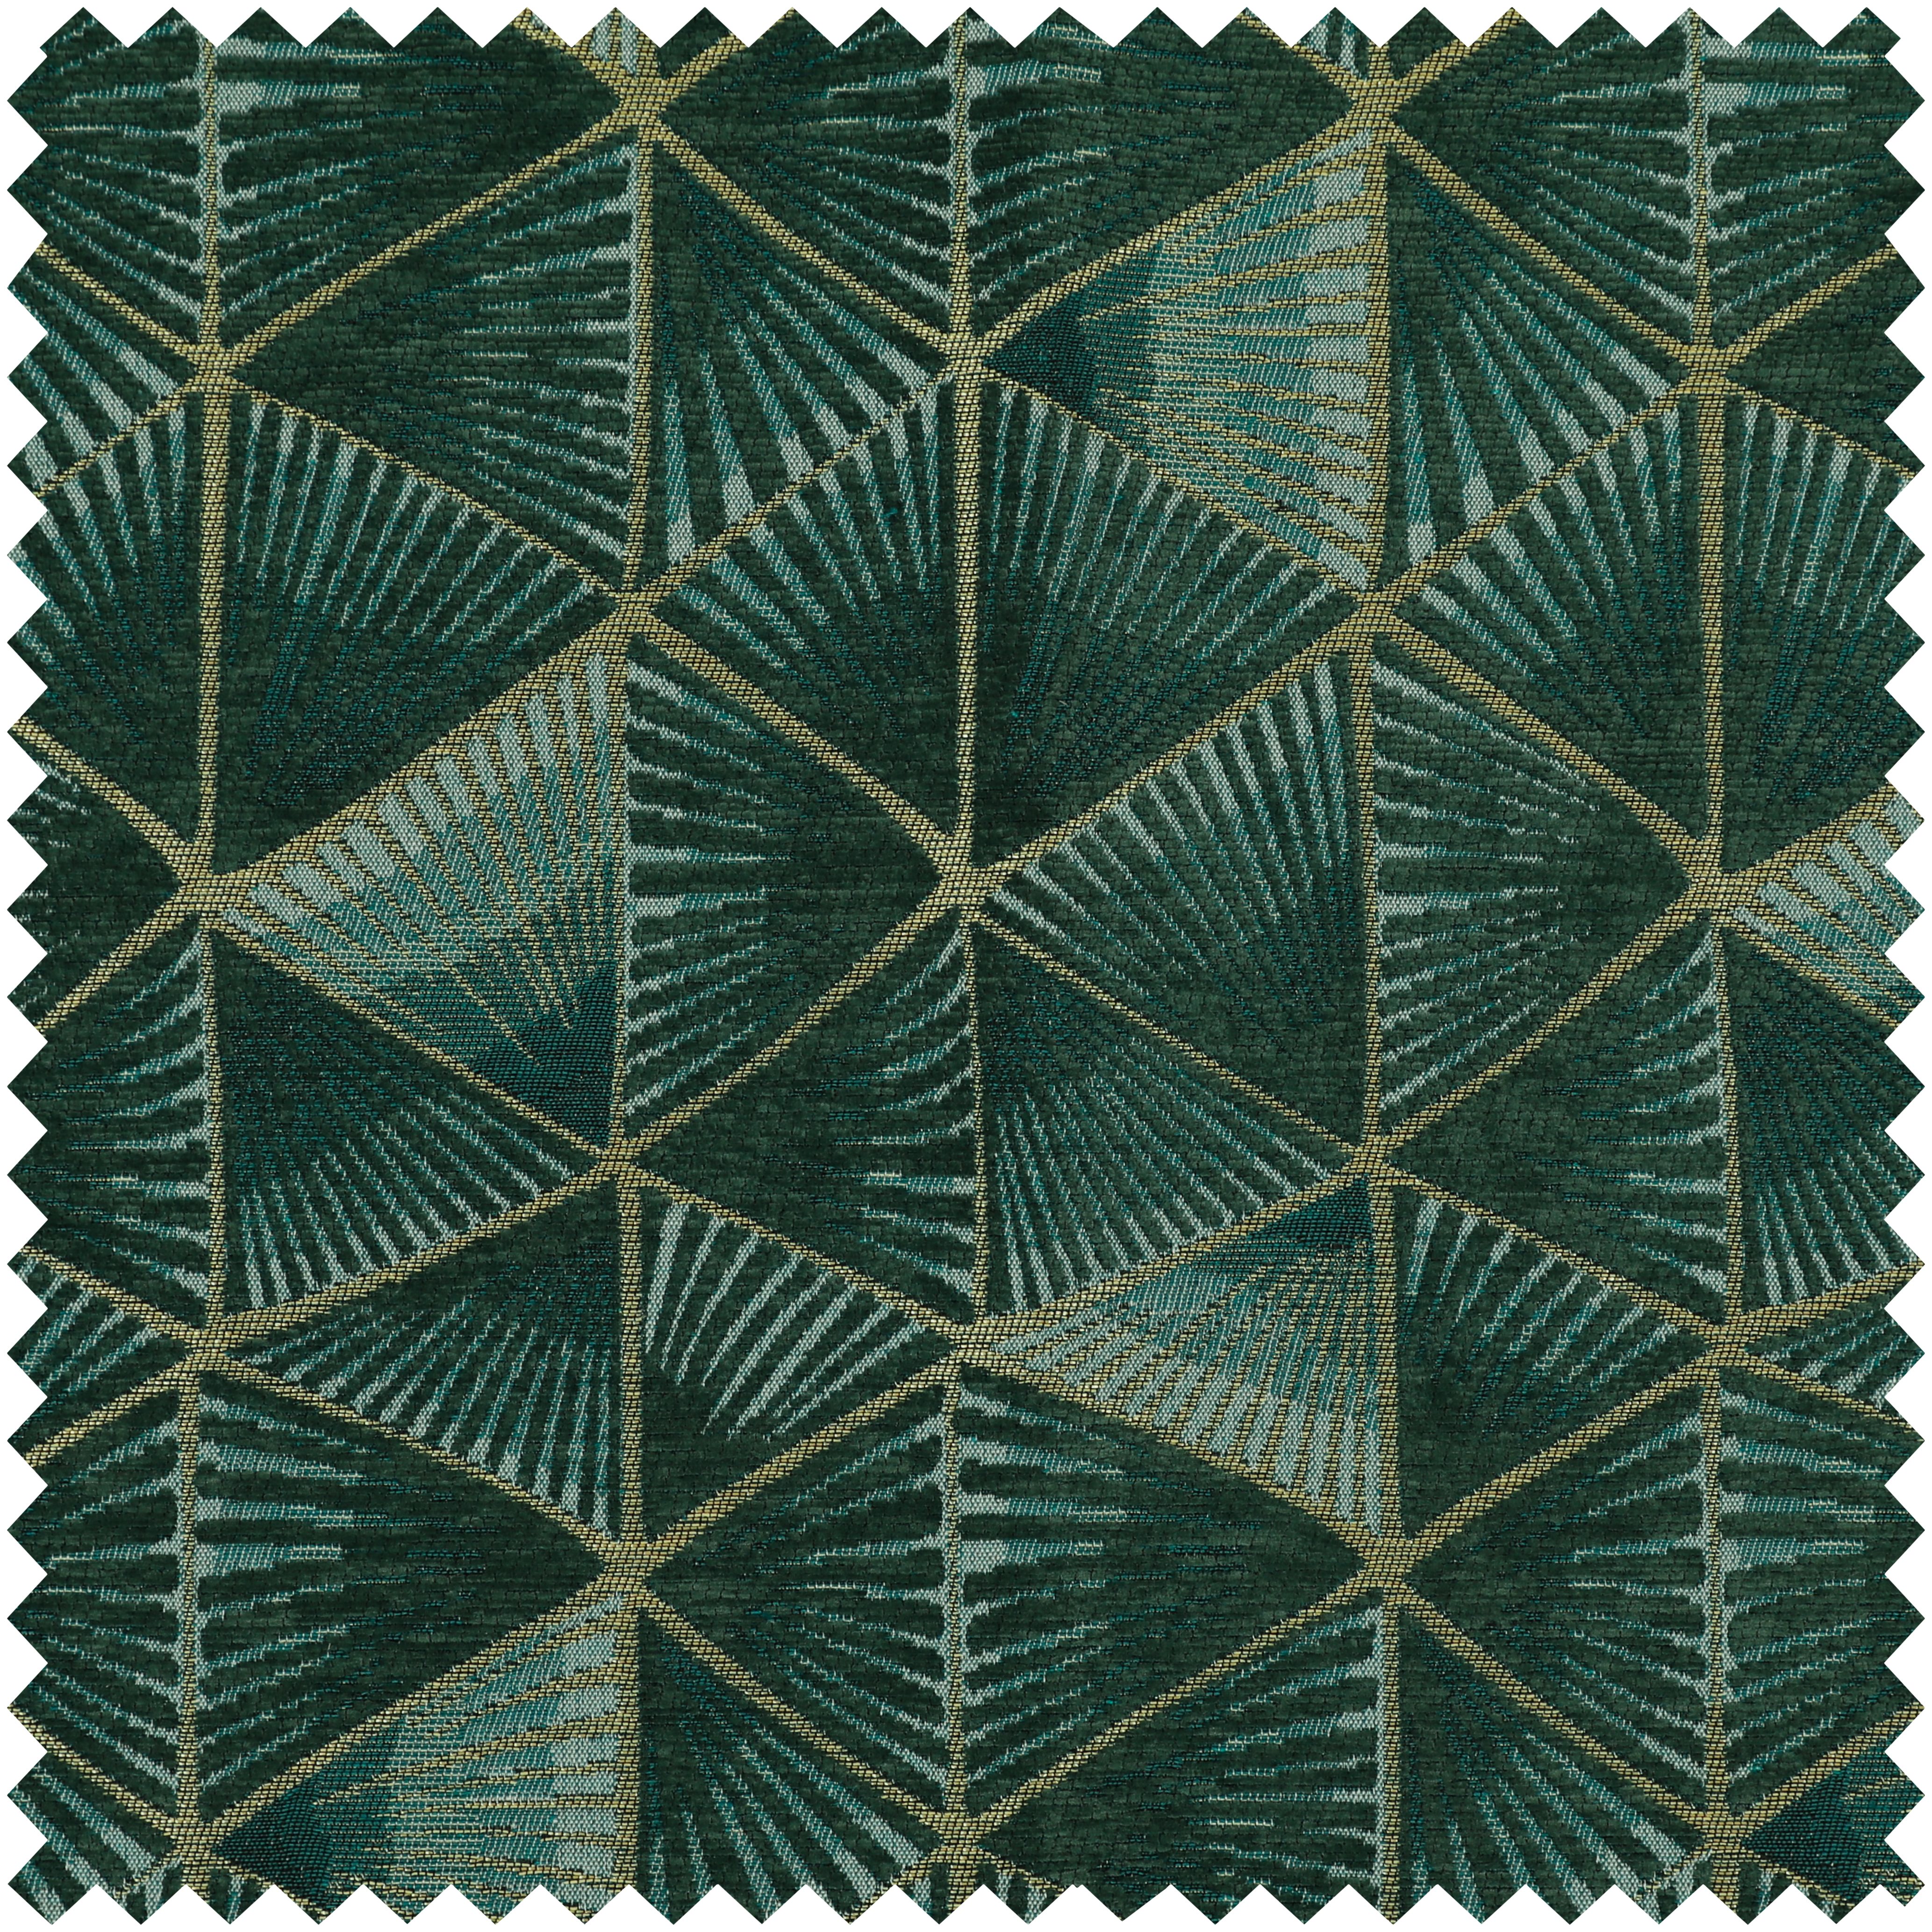 geometric-triangular-furnishing-pattern-green-gold-coloured-chenille-material-fabric-jo-96